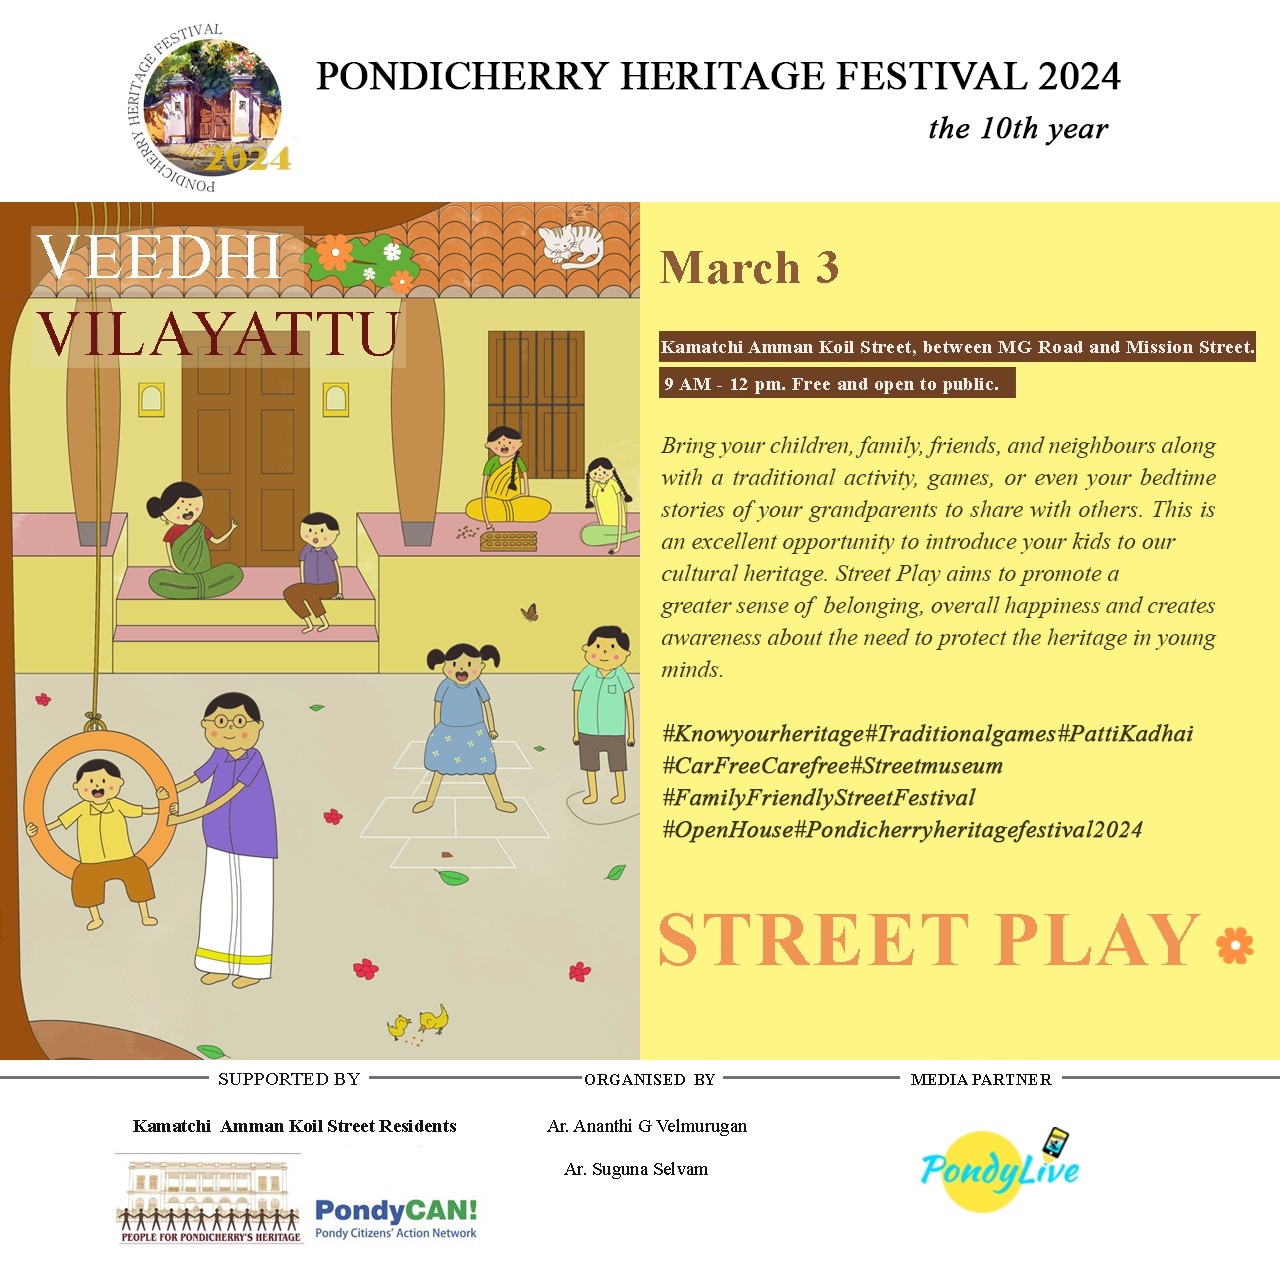 Street play veedhi vilayattiu in pondicherry as part of pondicherry heritage festival